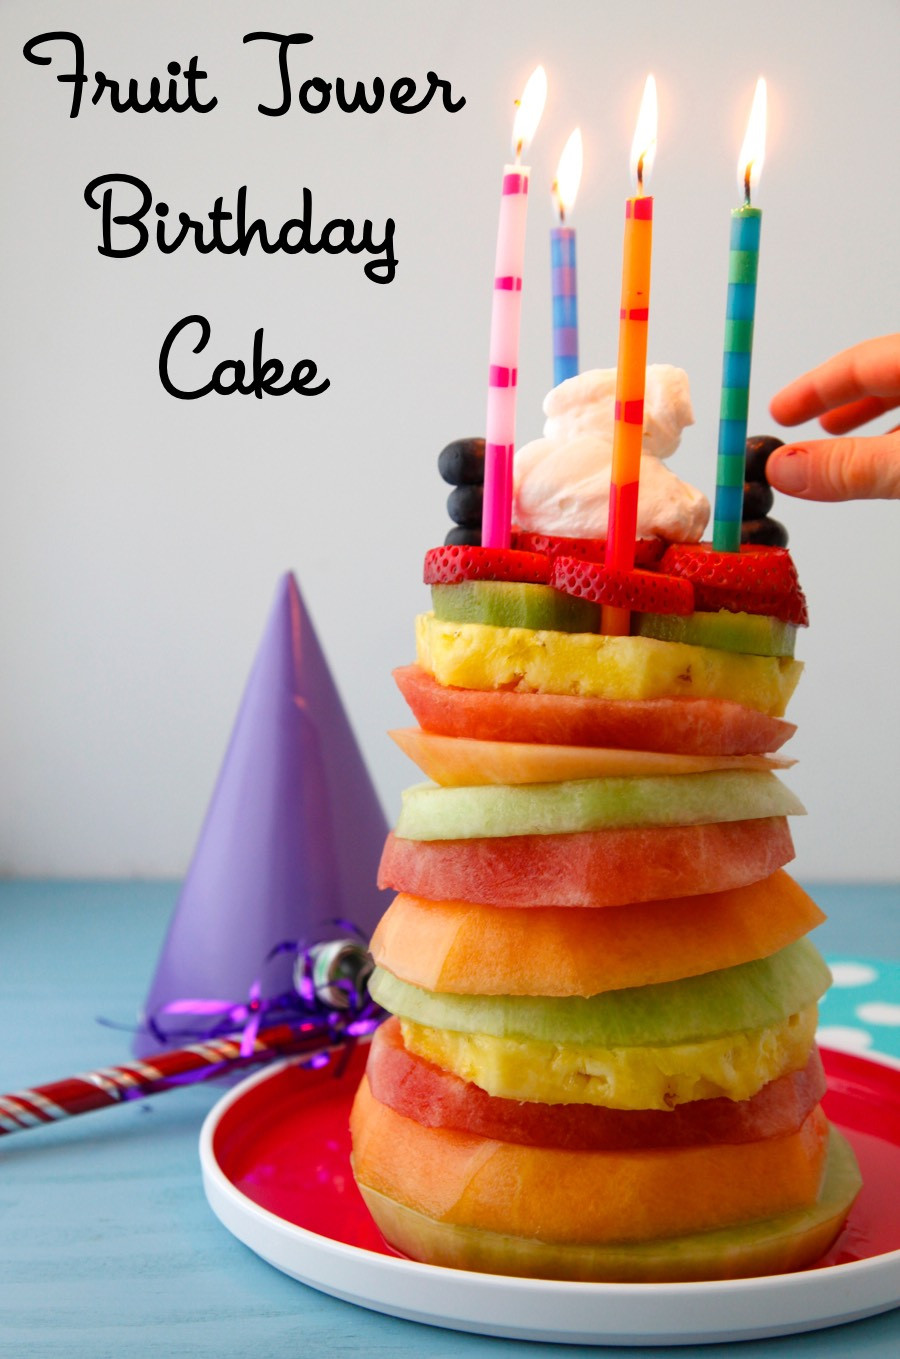 Healthy Birthday Cake Recipes
 Fruit Tower Birthday Cake